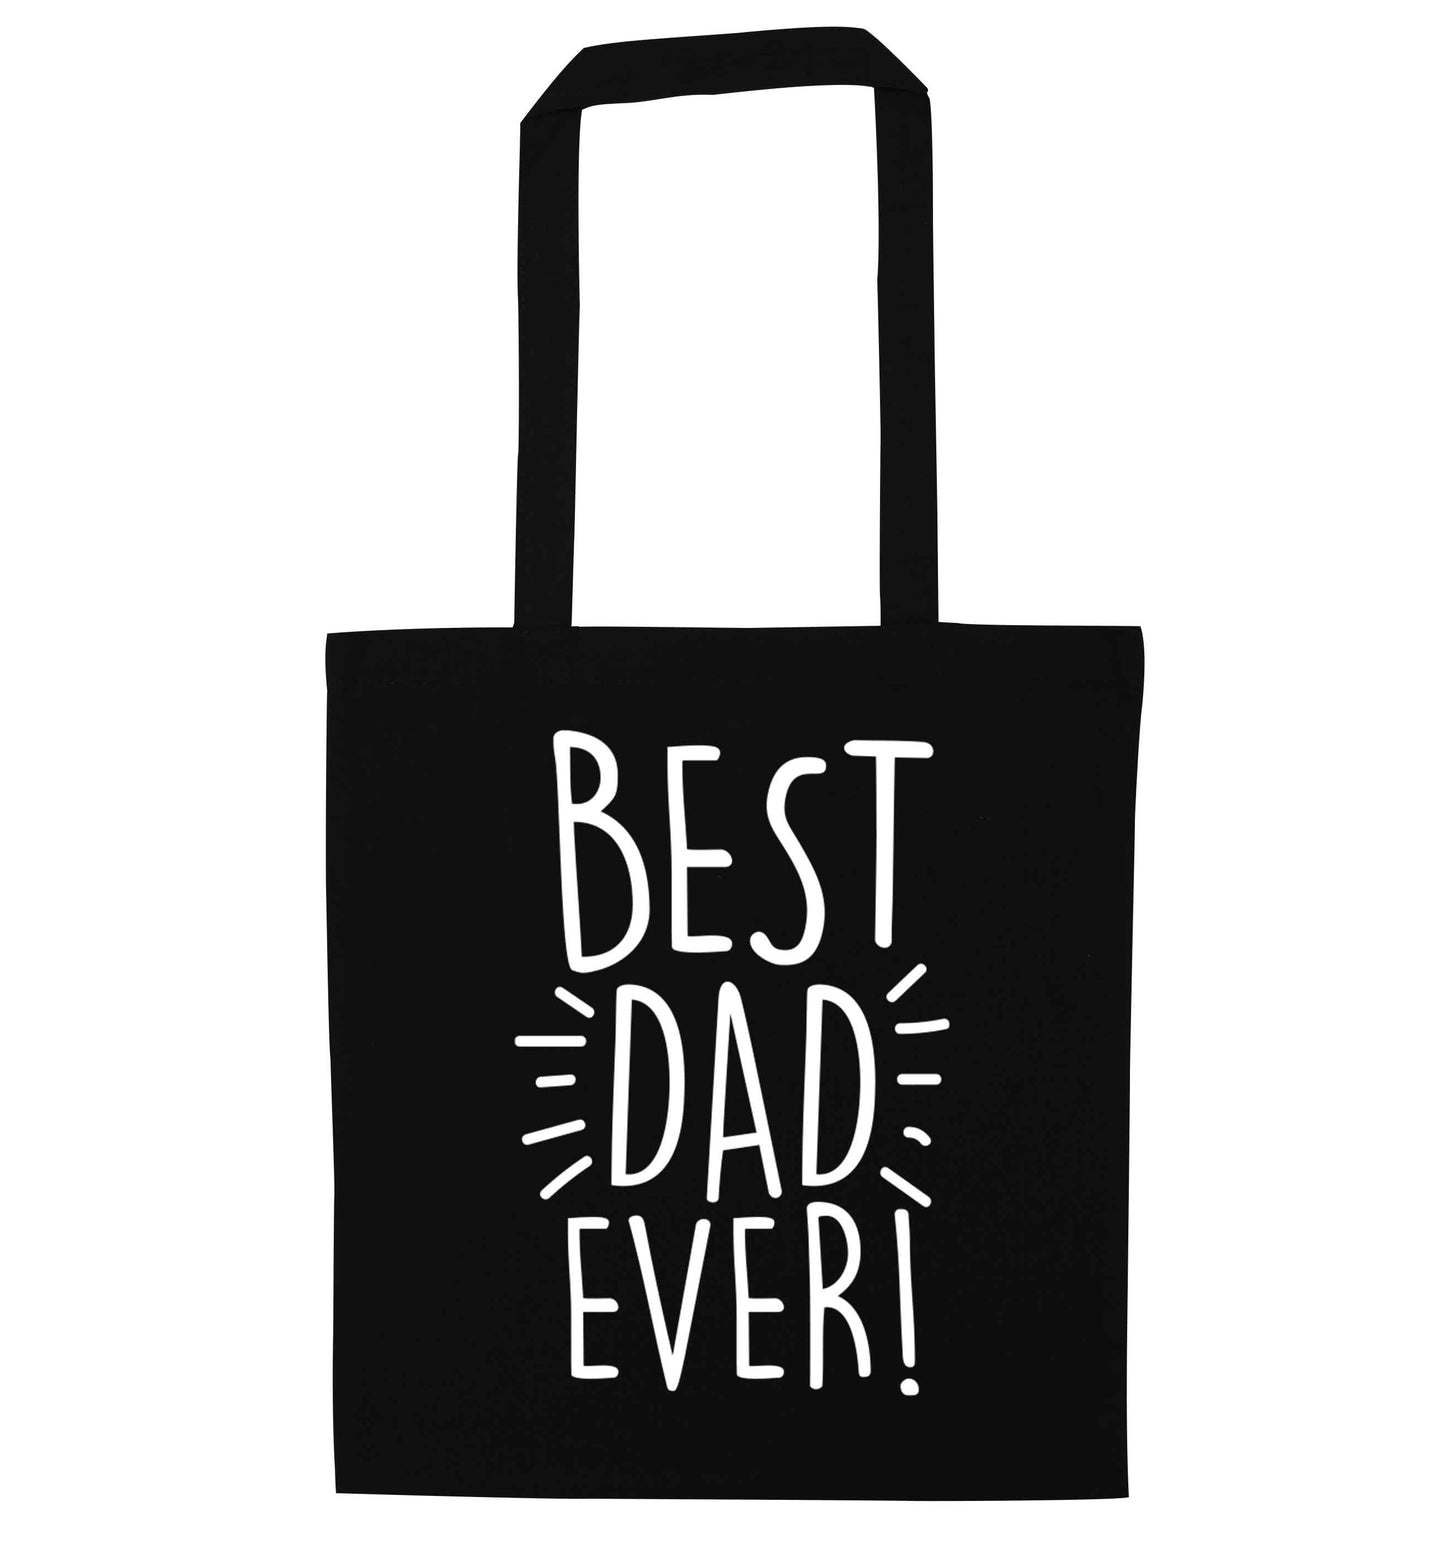 Best dad ever! black tote bag